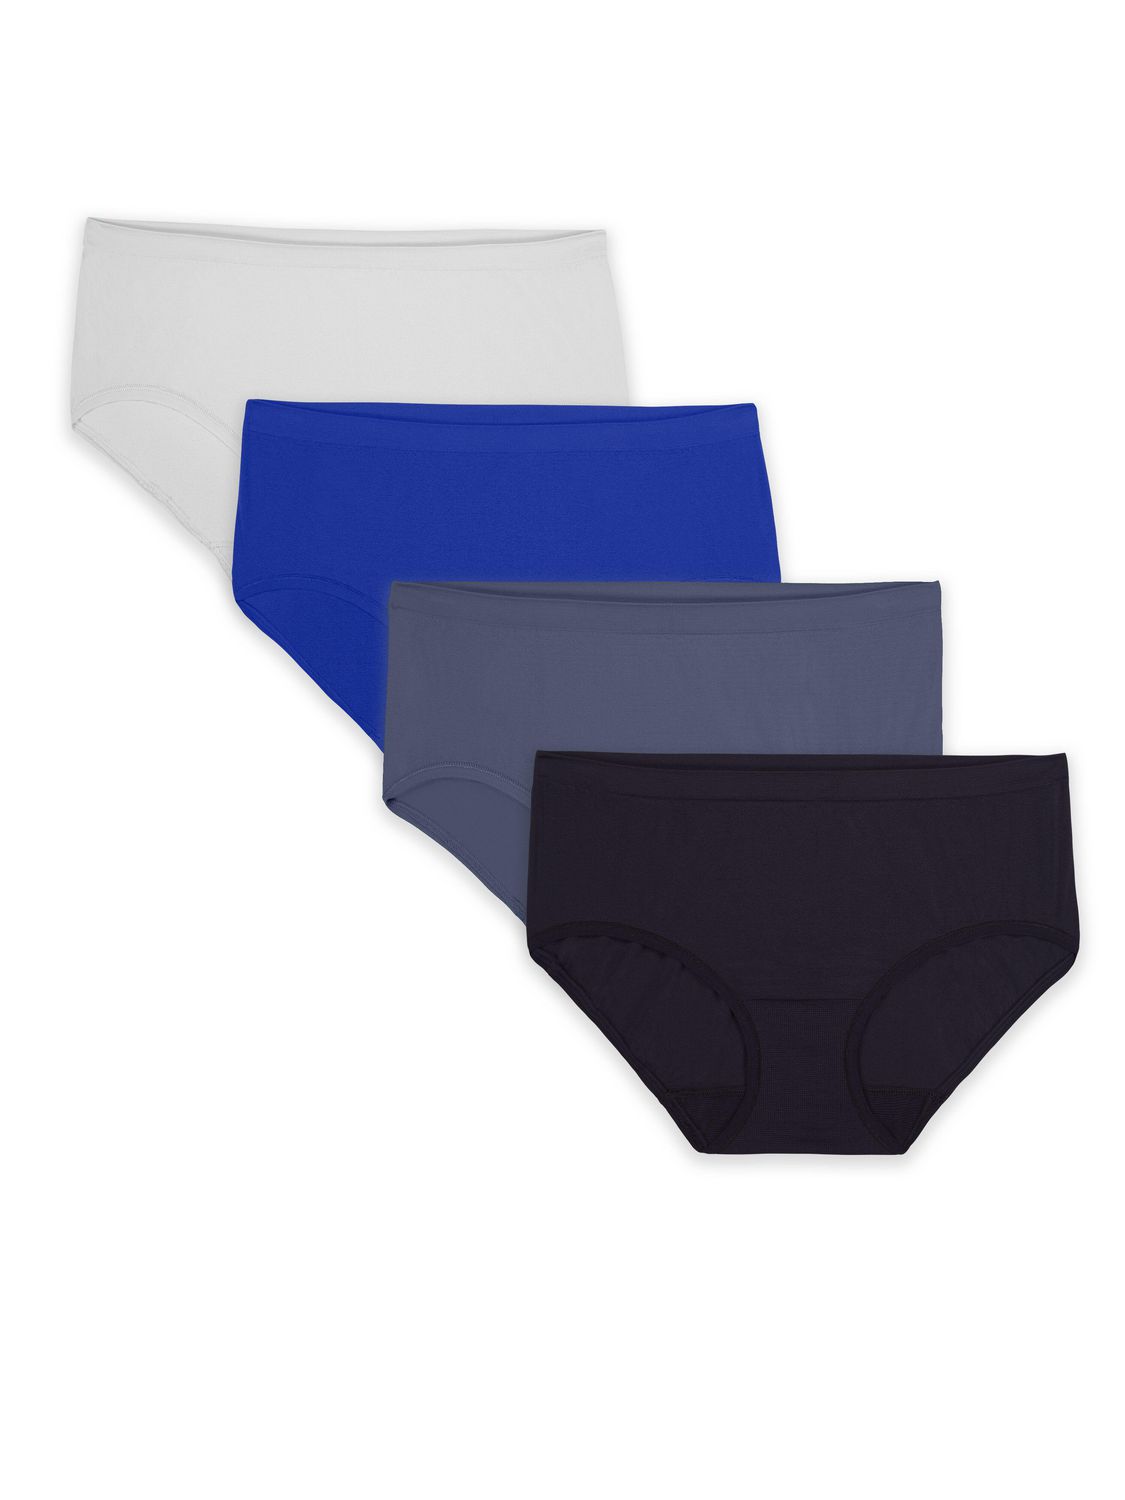 Bikini Ultra Pee Panties 1 pc, Incontinence Underwear